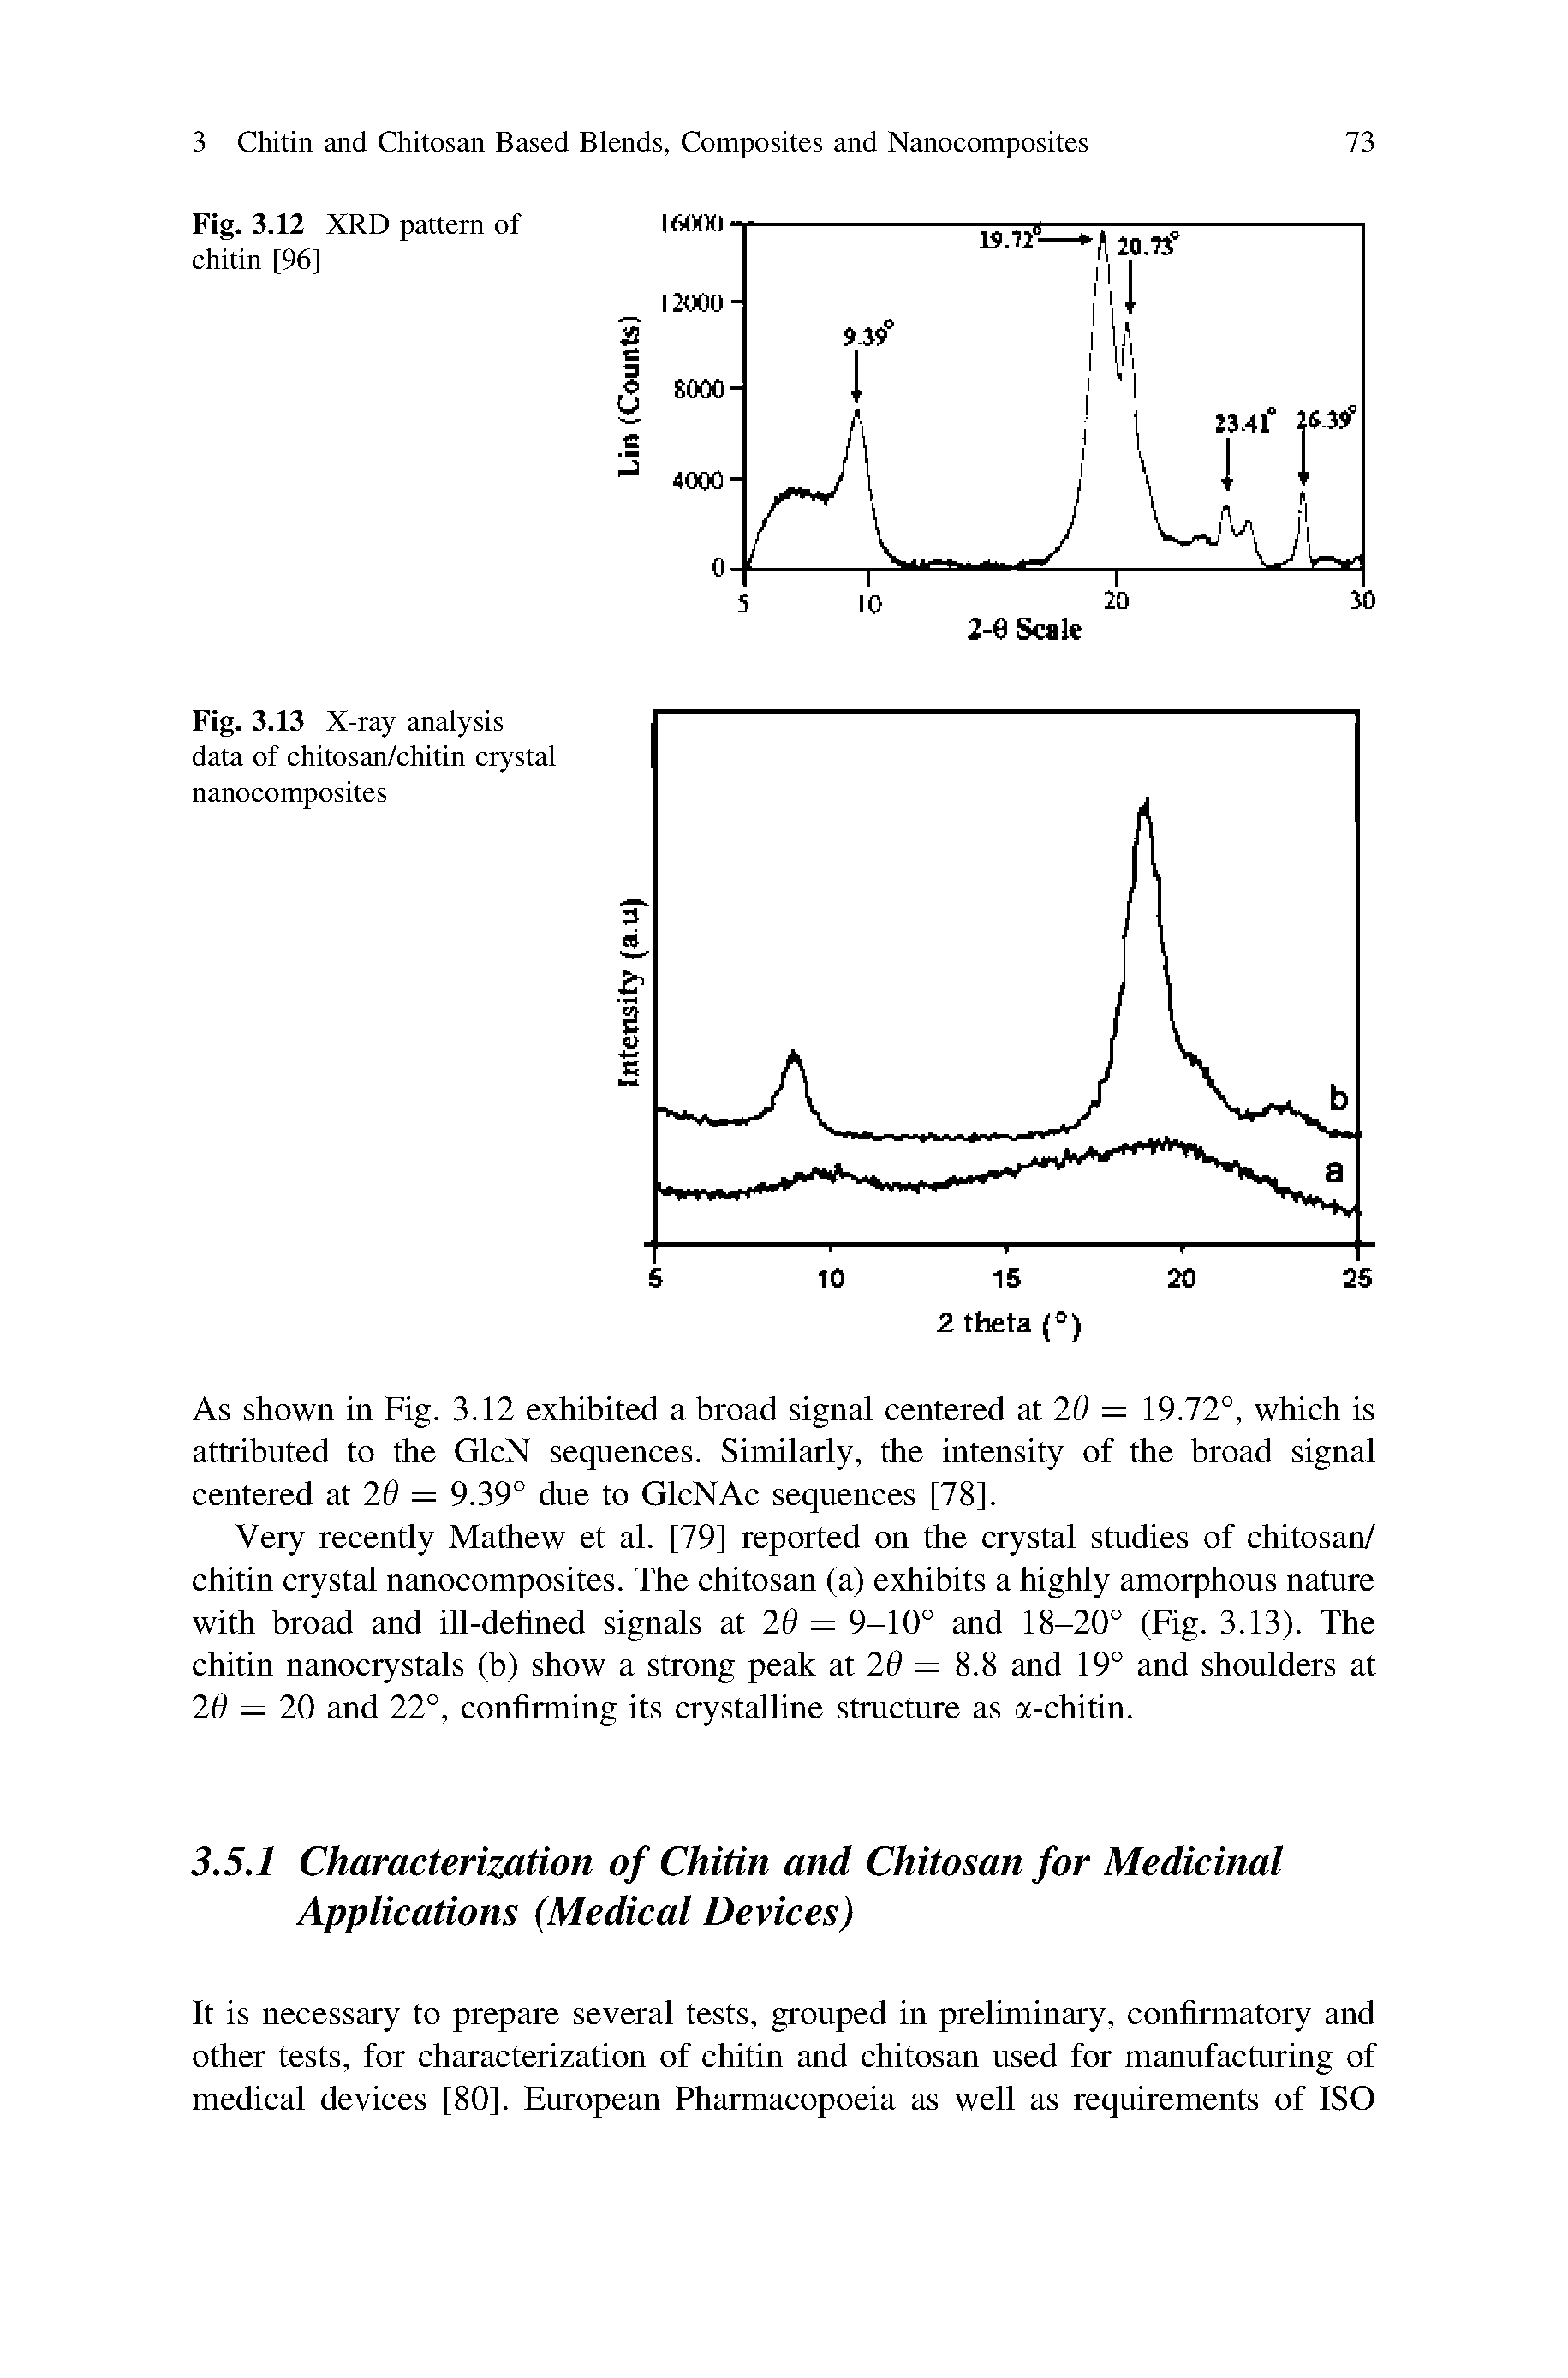 Fig. 3.13 X-ray analysis data of chitosan/chitin crystal nanocomposites...